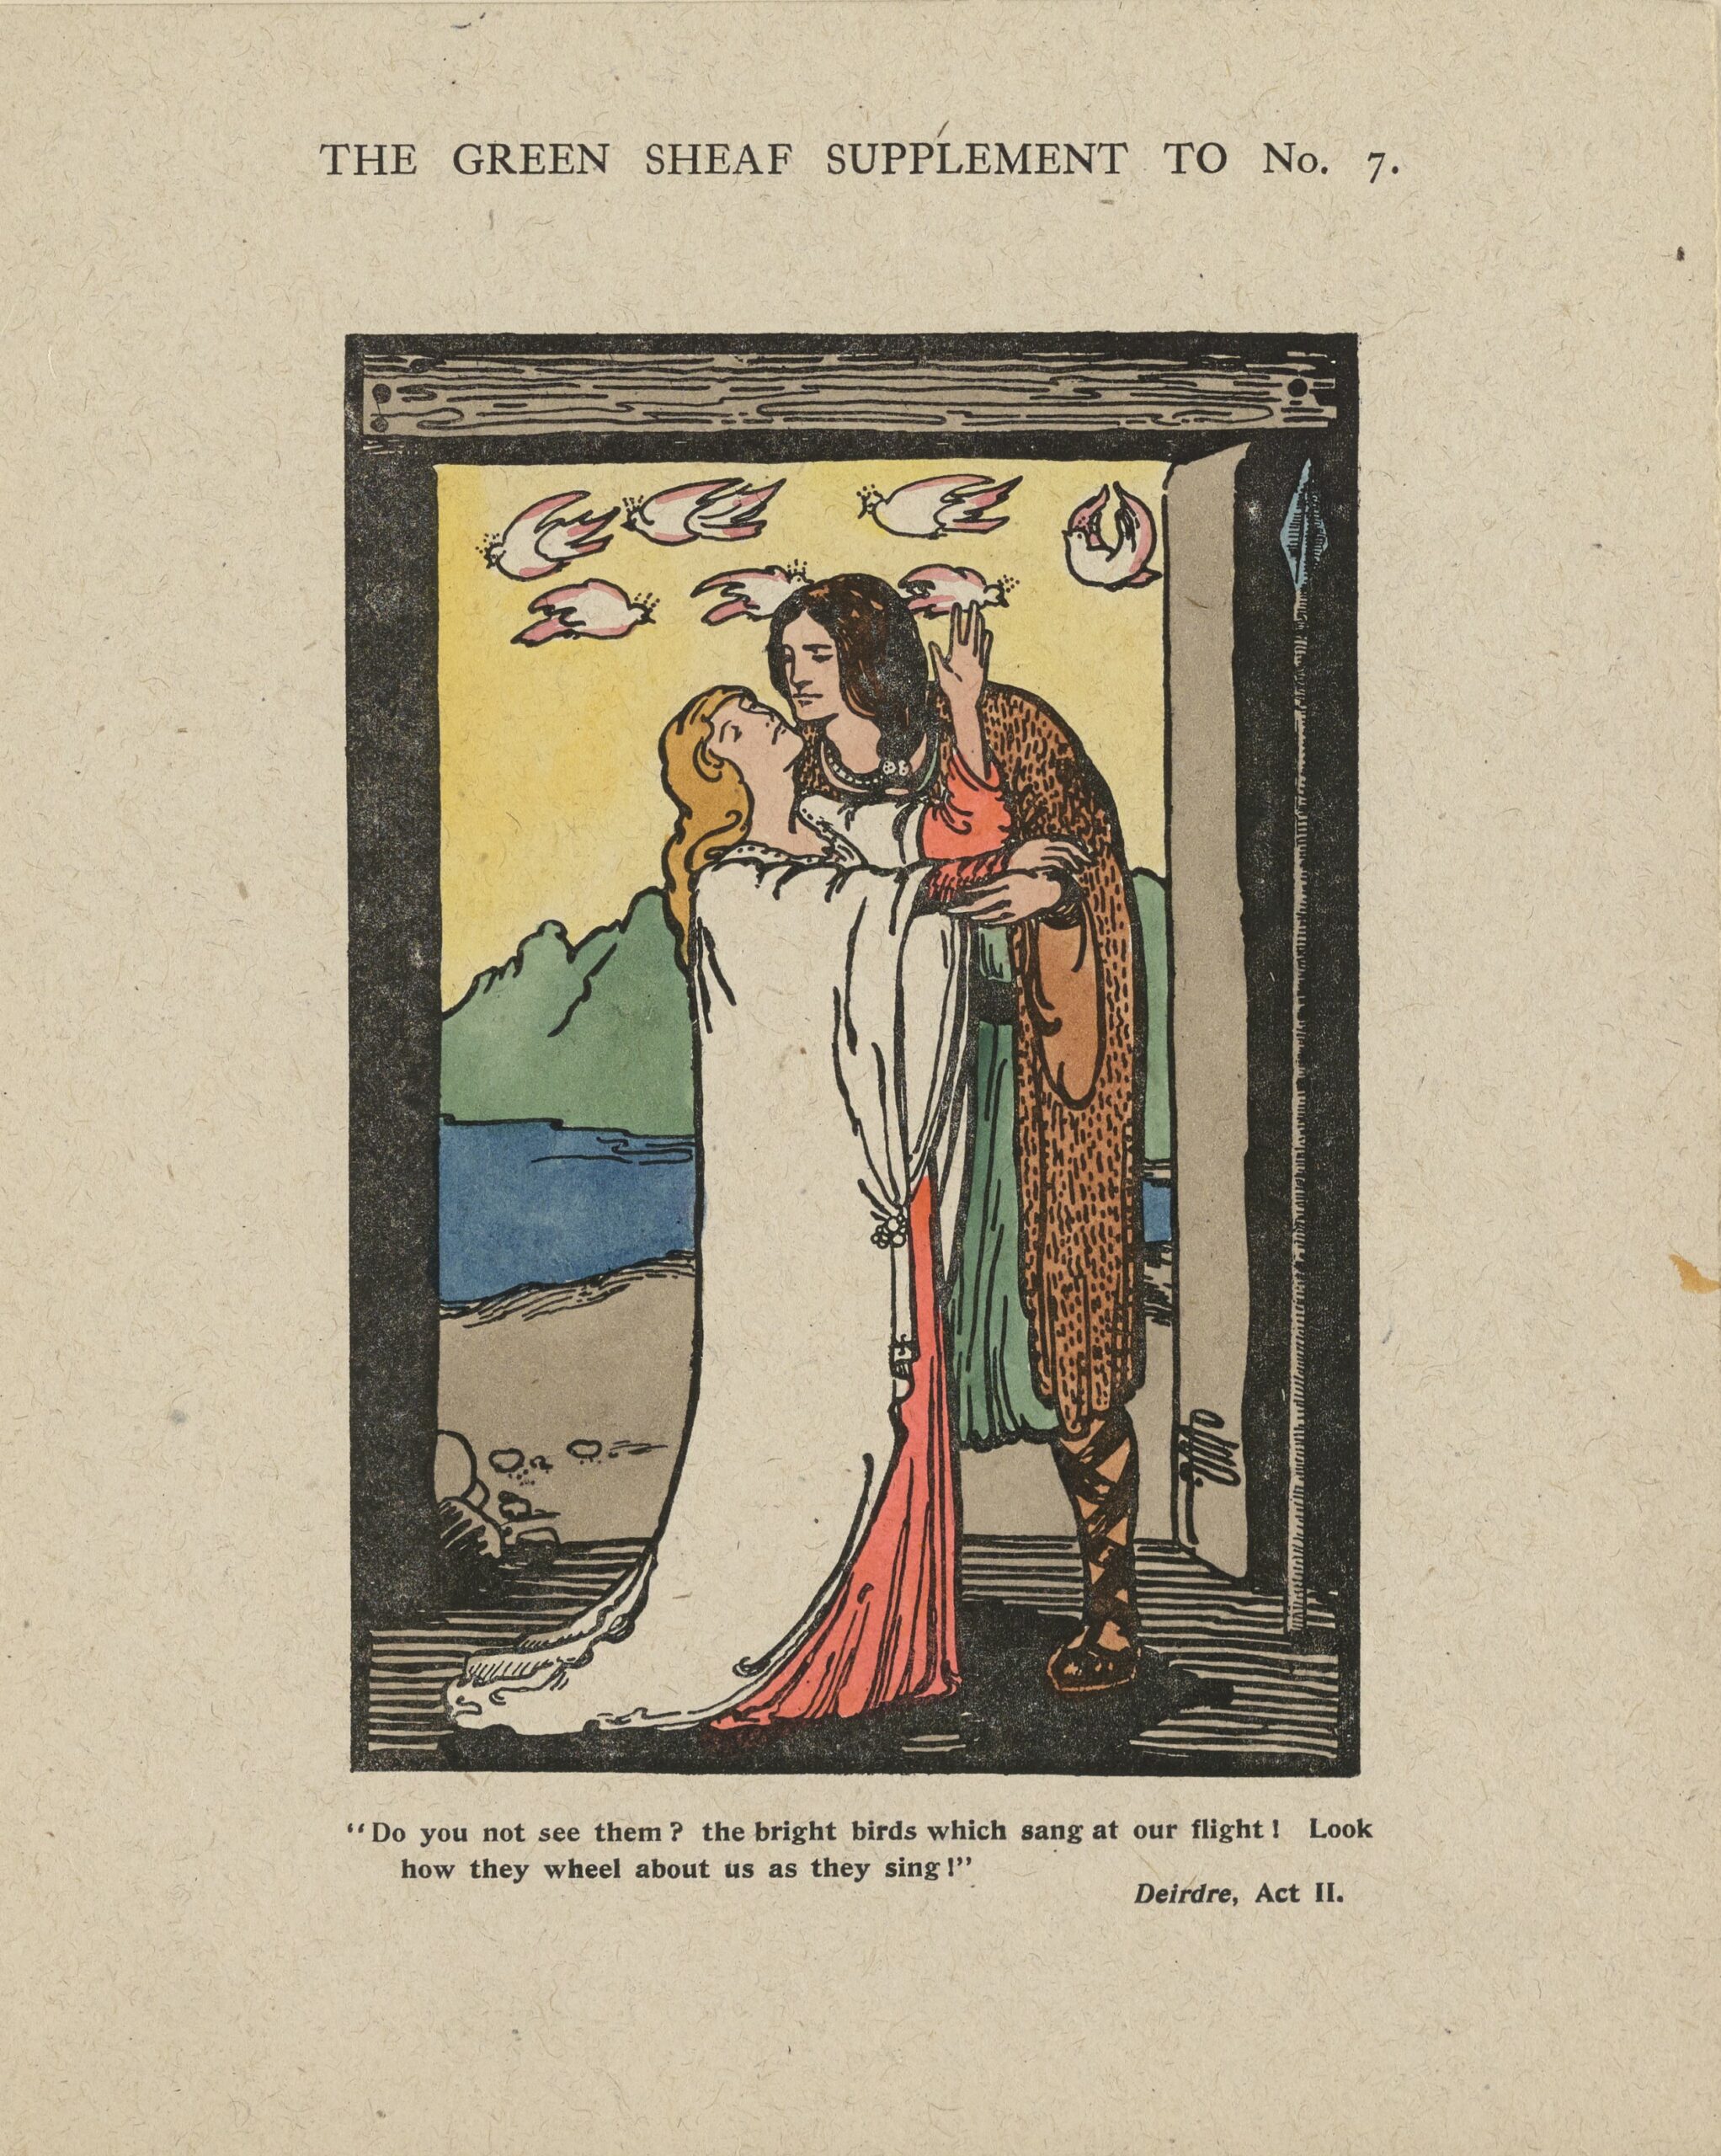  Pamela Colman Smith, "Do you not seem them?" Illustration for A.E.'s                        Deirdre, Supplement to The Green Sheaf, No. 7 (1903) 